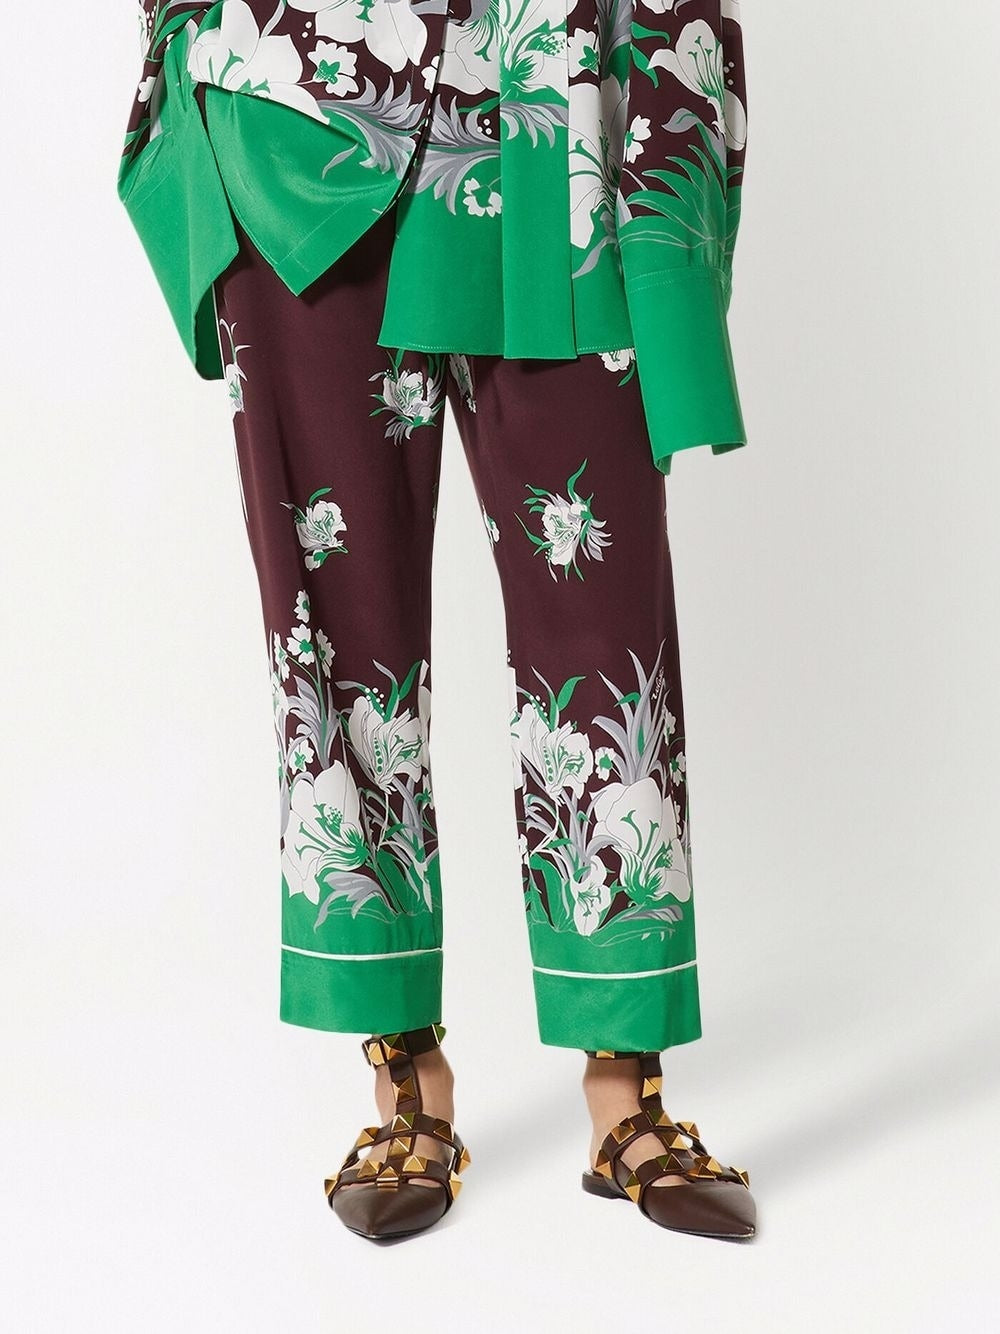 Pantalone palazzo in seta fantasia floreale marrone/verde